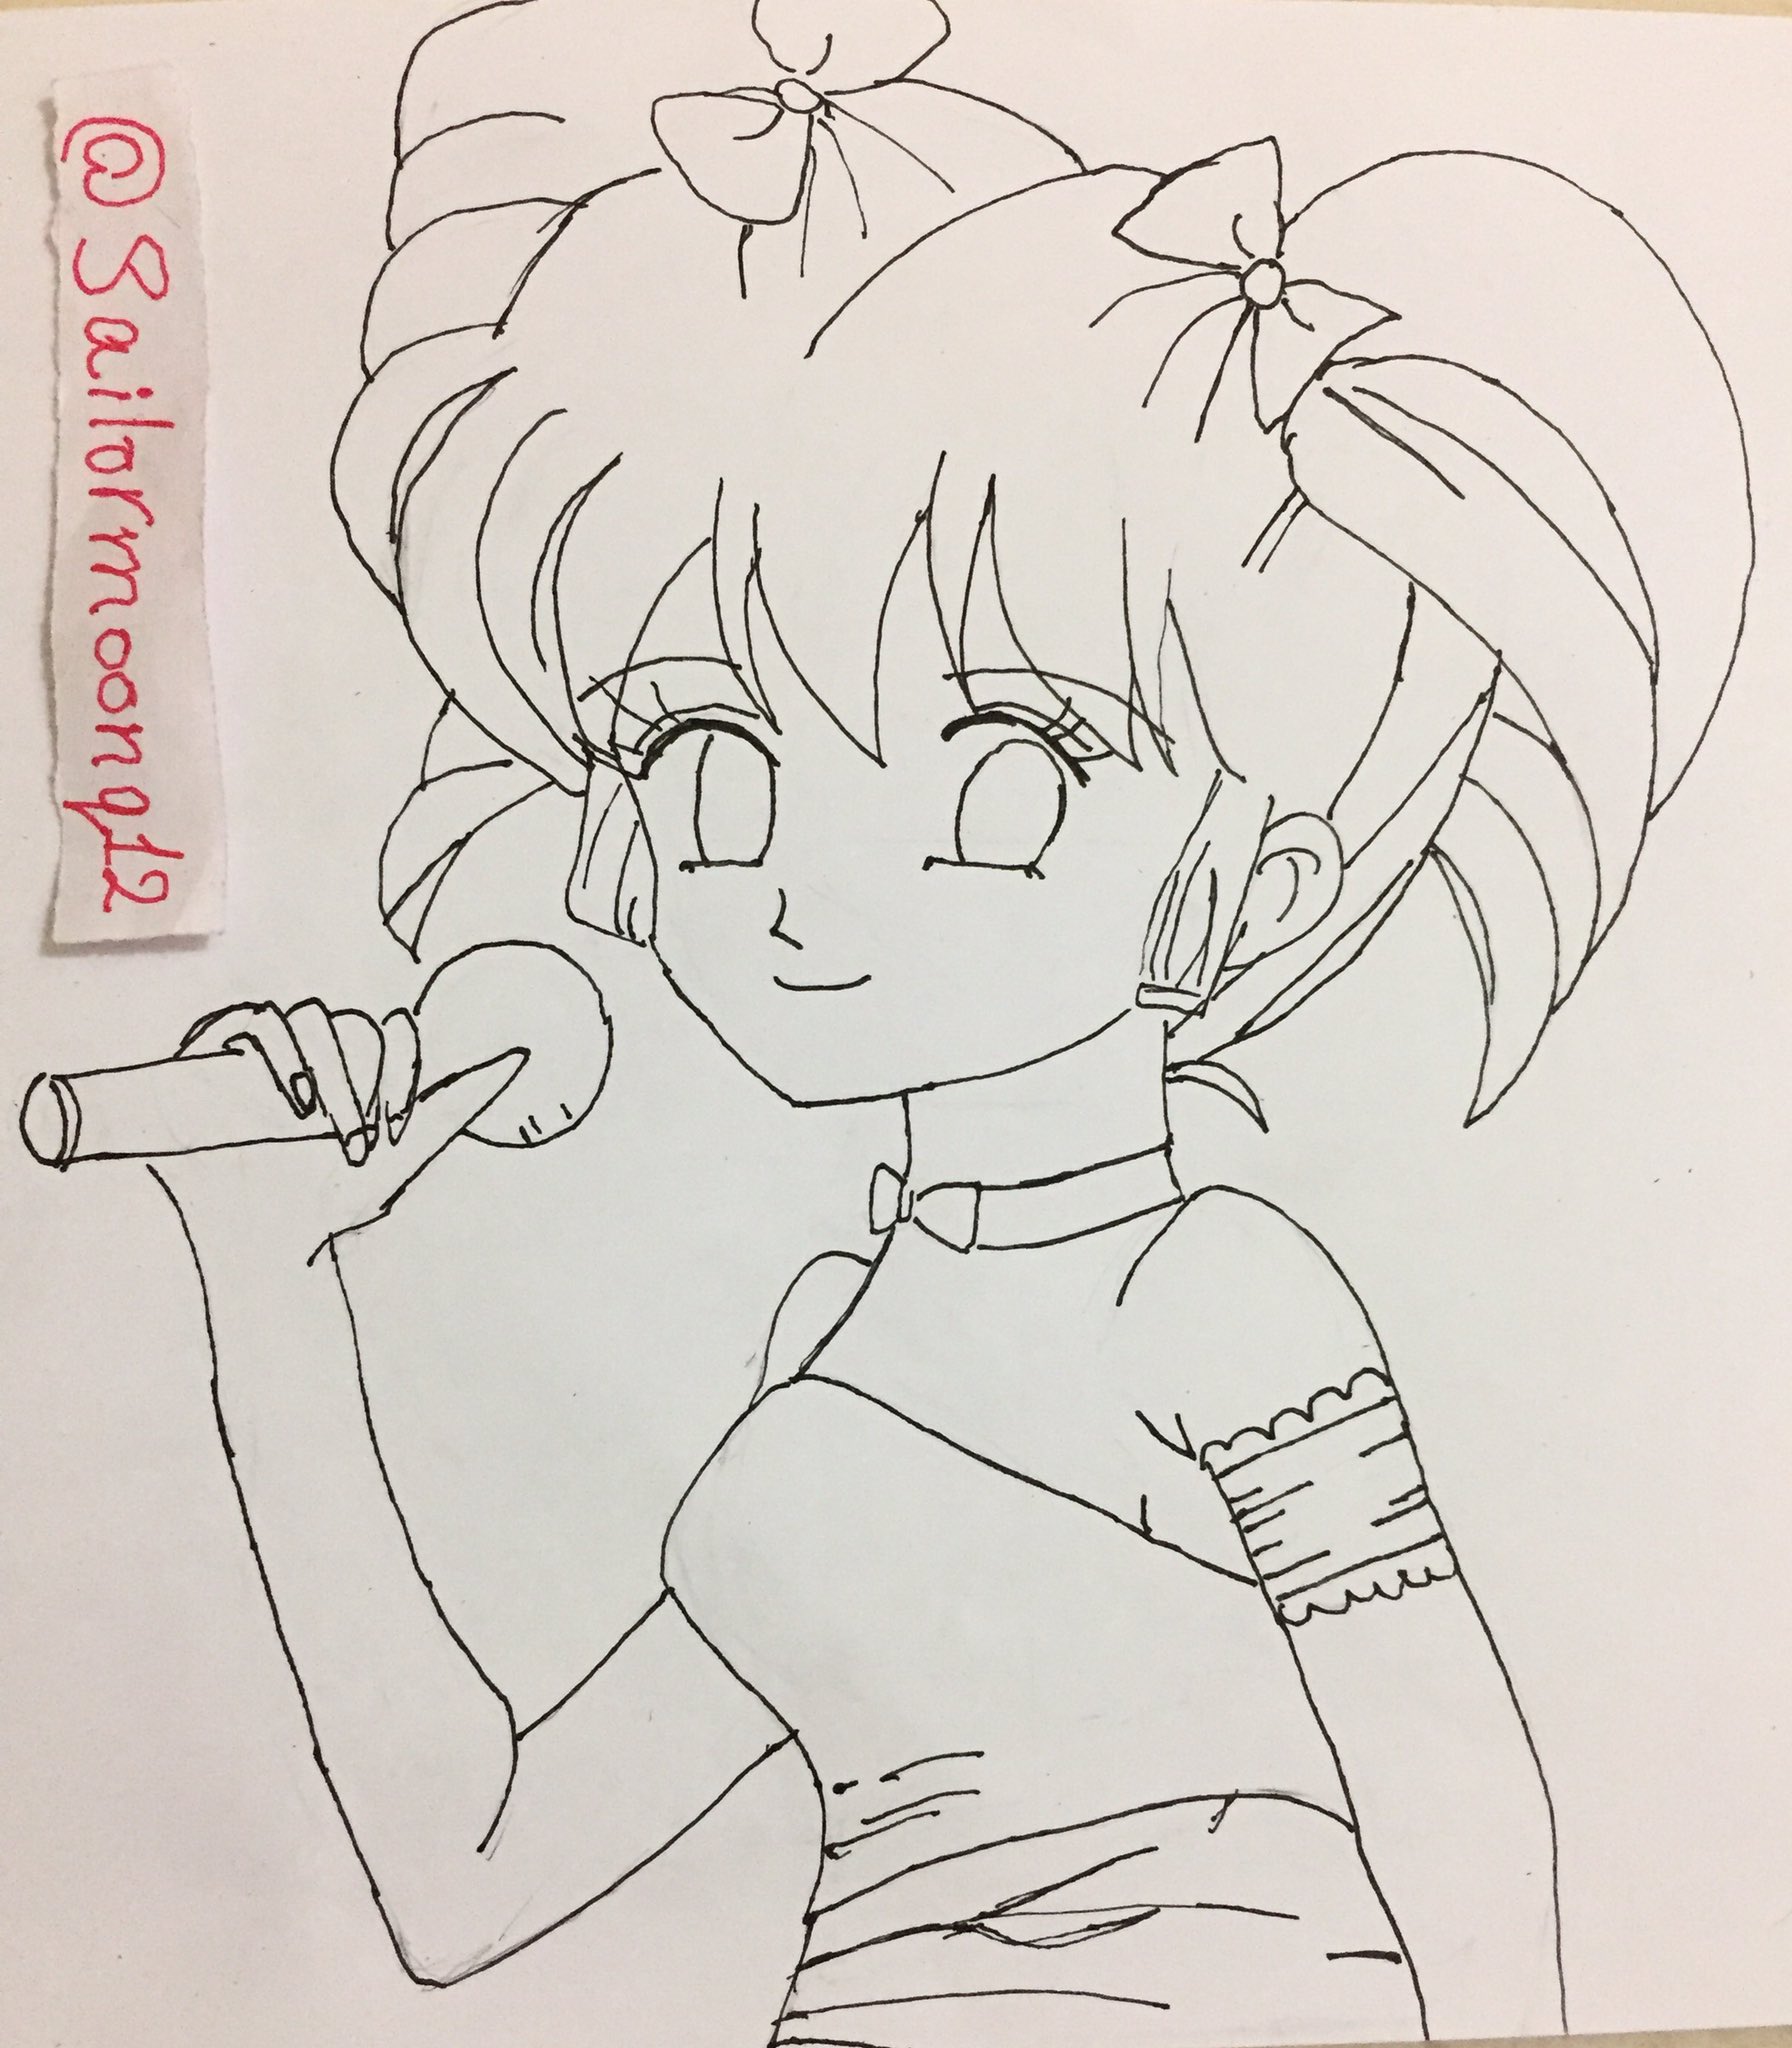 SailorMoon on X: "رسمتي ايروكا ✨ #كلنا_رسامين #رسمتي_كلنا_رسامين #انمي  #اوتاكو #art #anime #eriko #MeetOtaku #otaku #drawing  https://t.co/2SEma1BW12" / X